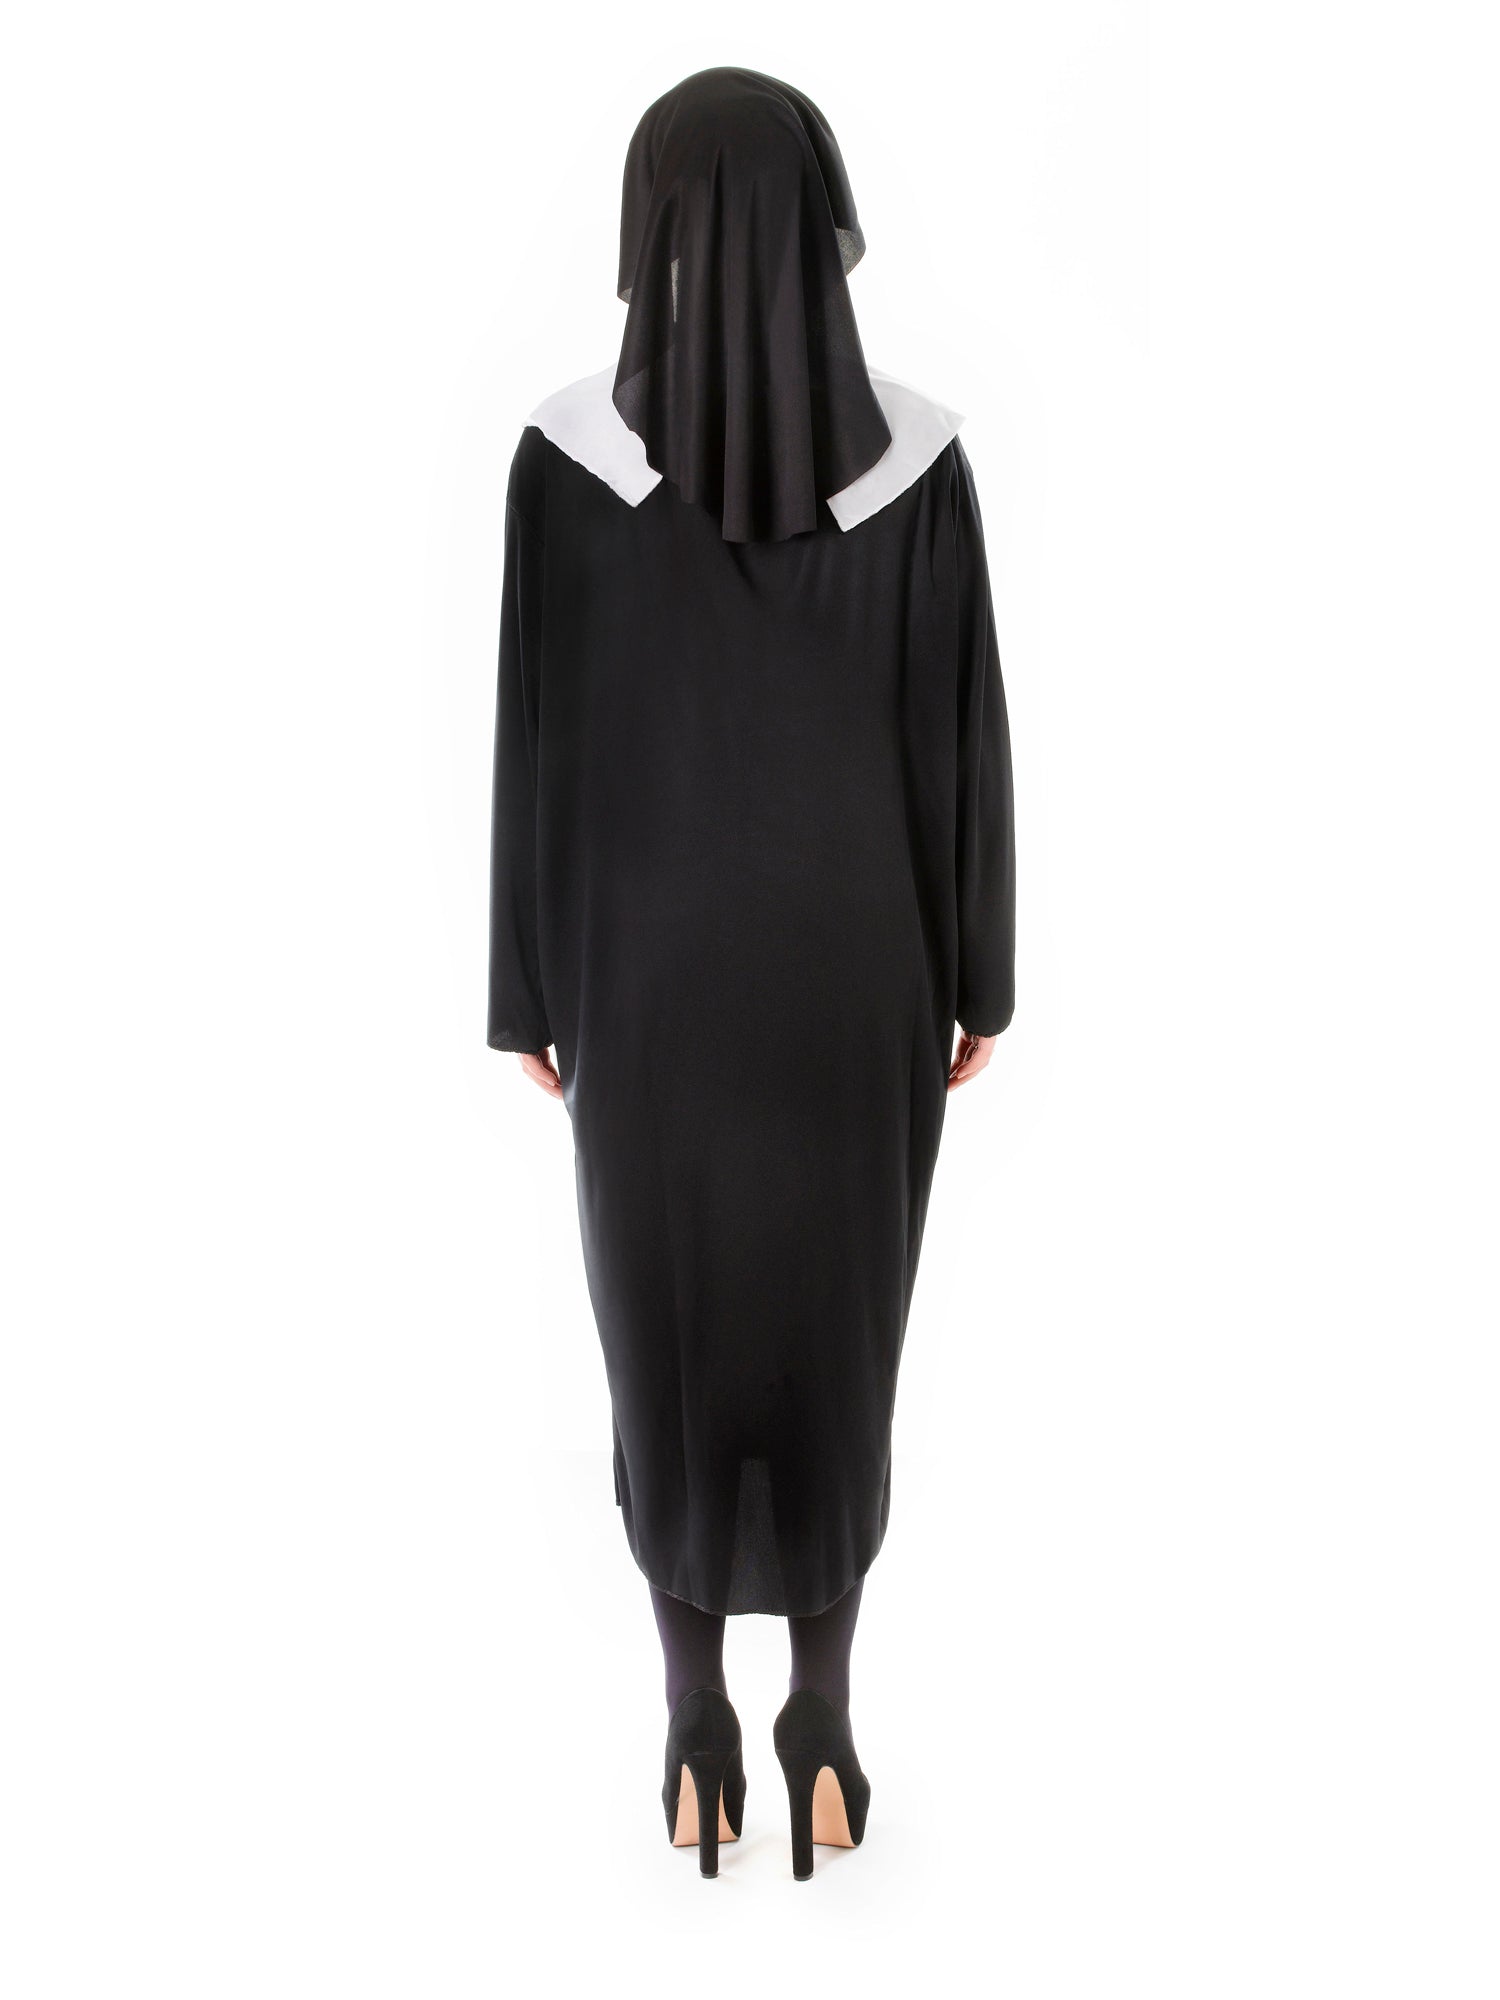 Nun, Multi, Generic, Adult Costume, Large, Side